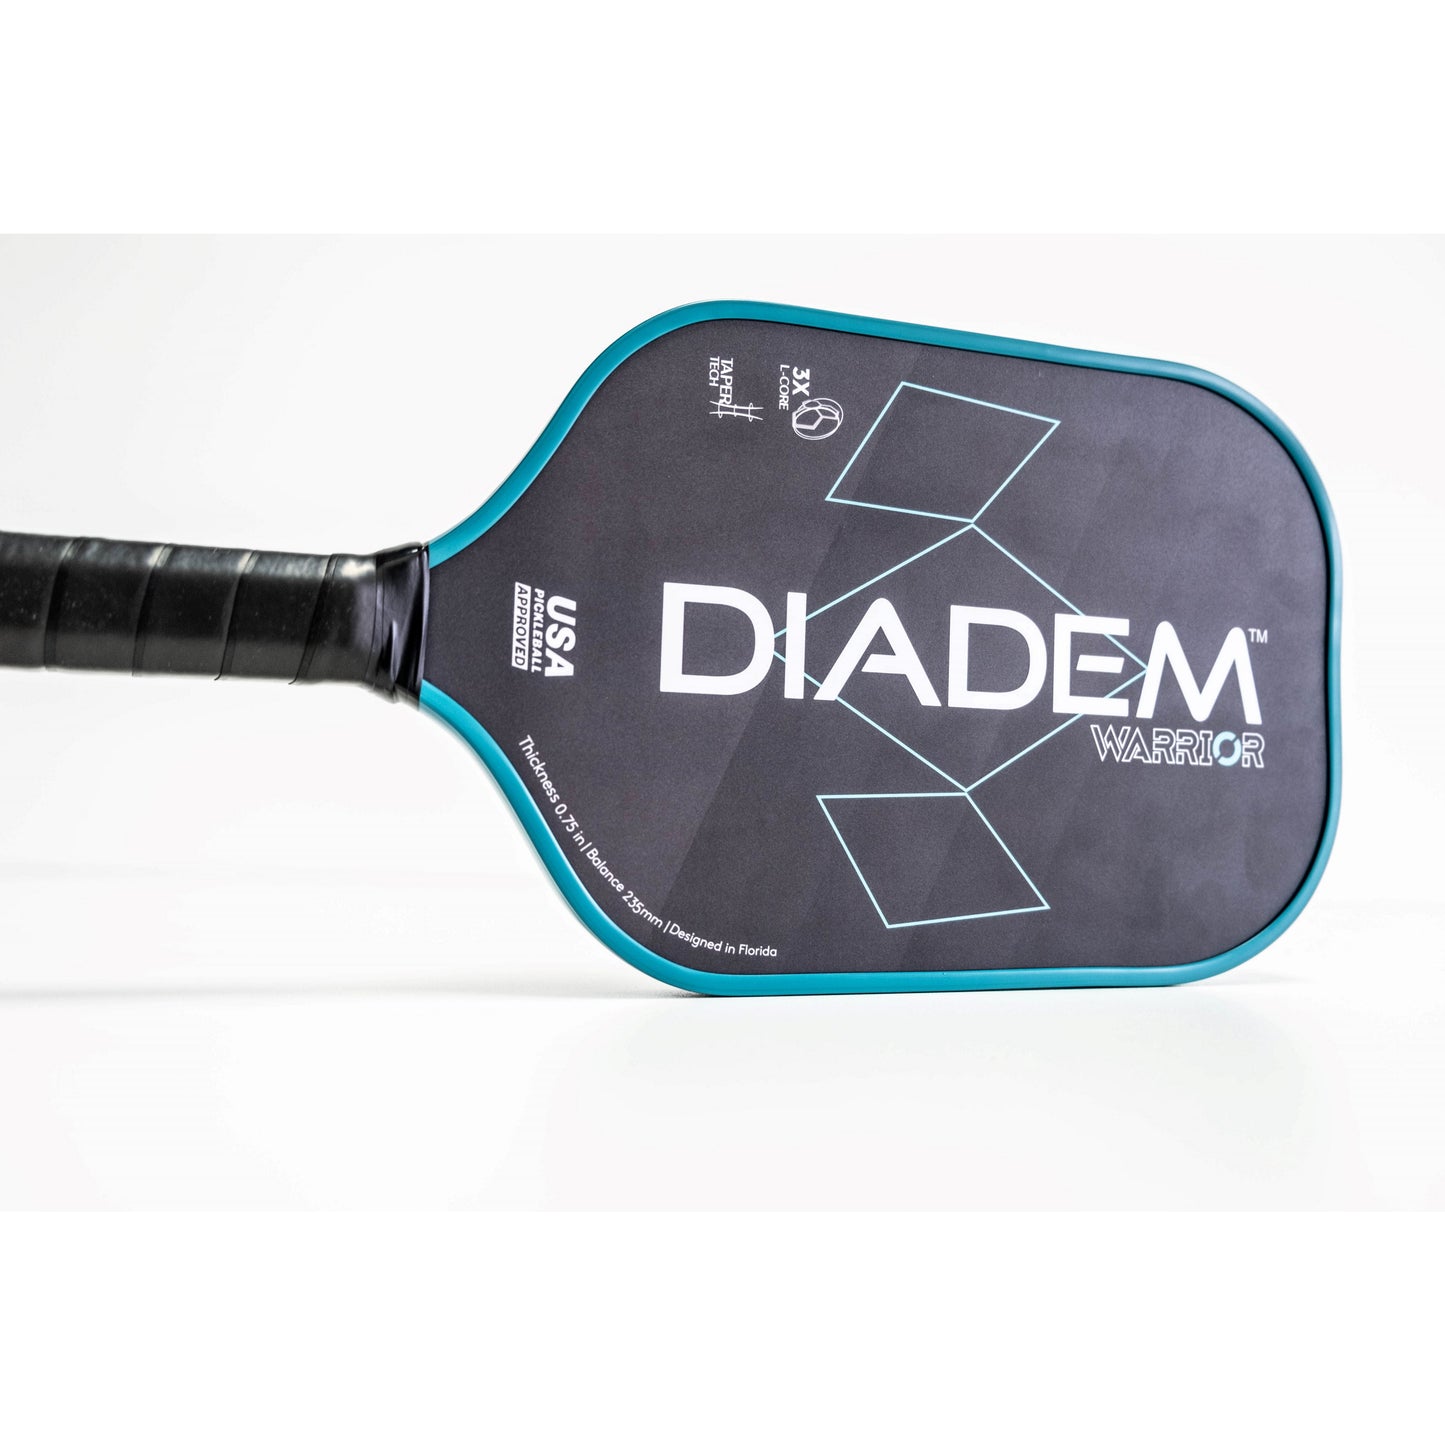 Diadem Warrior Paddle